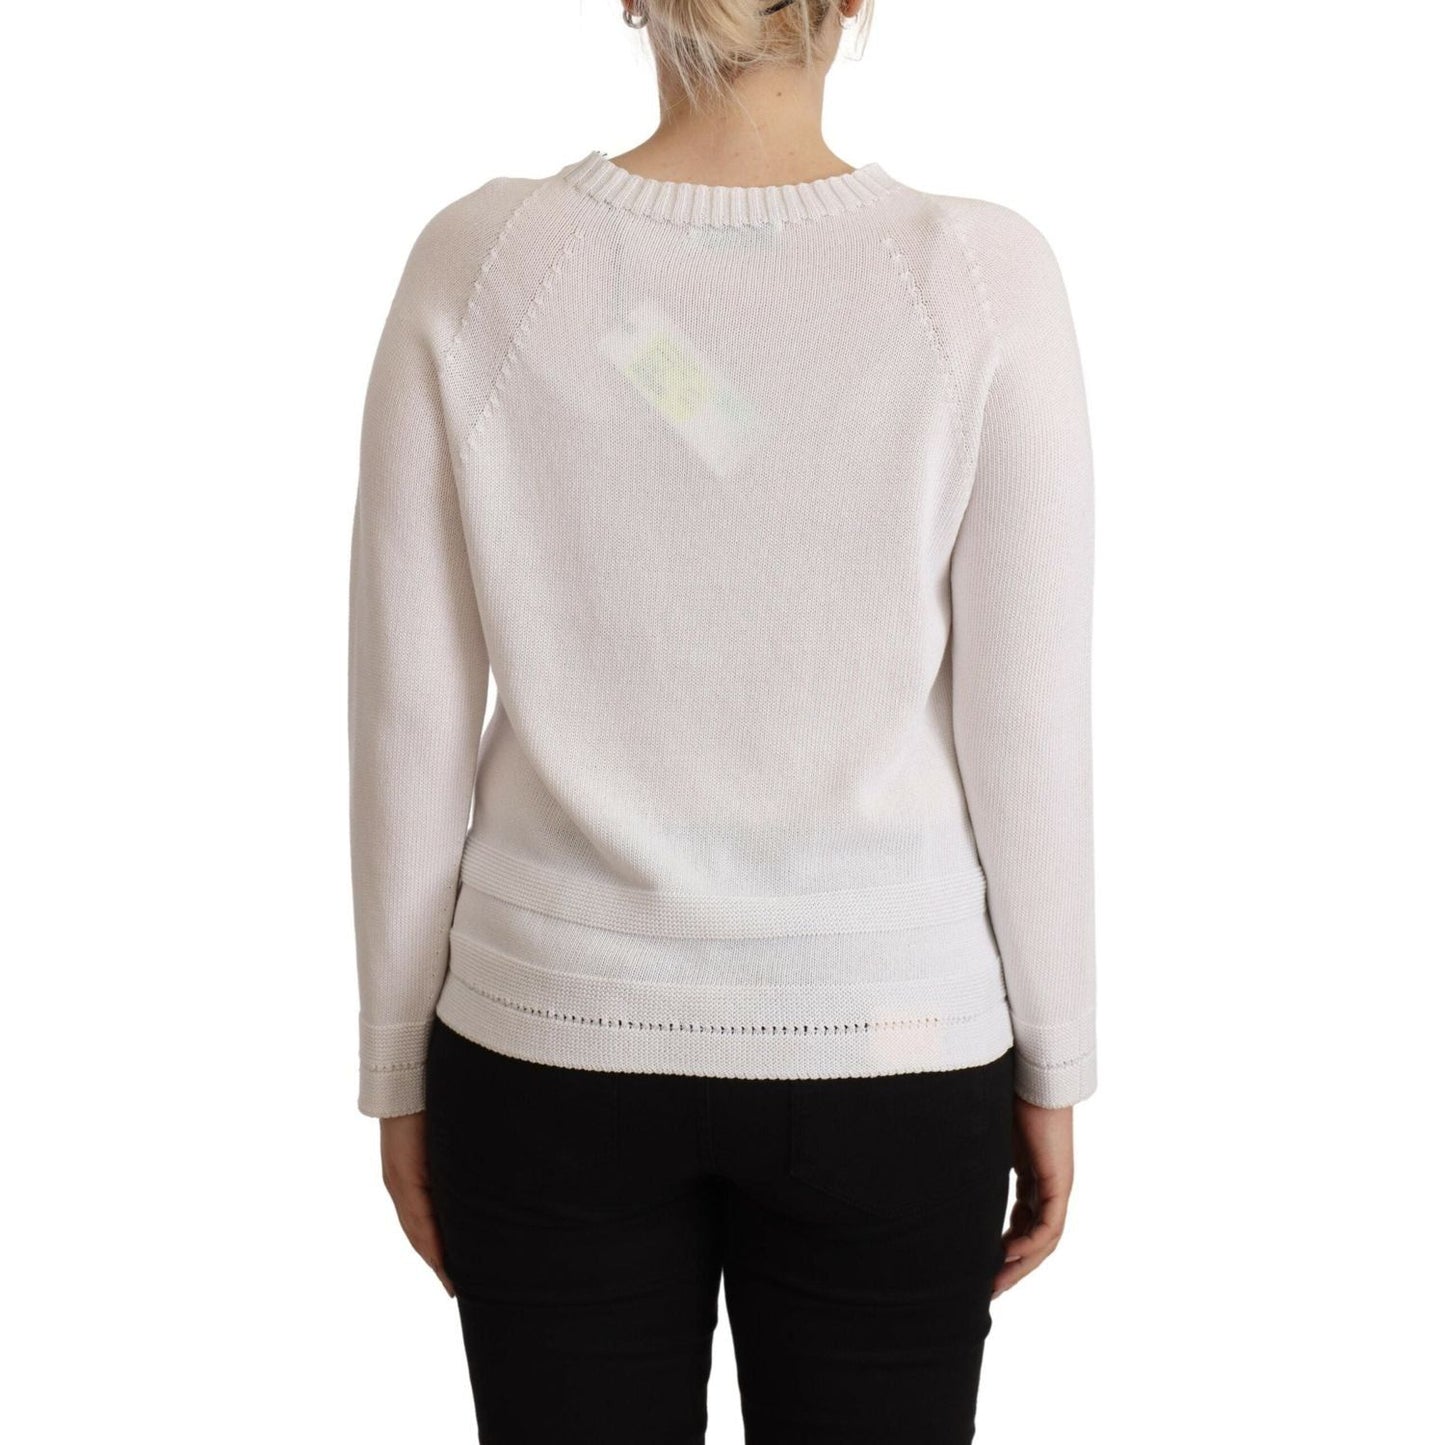 Alpha StudioElegant White Cotton Pullover SweaterMcRichard Designer Brands£129.00